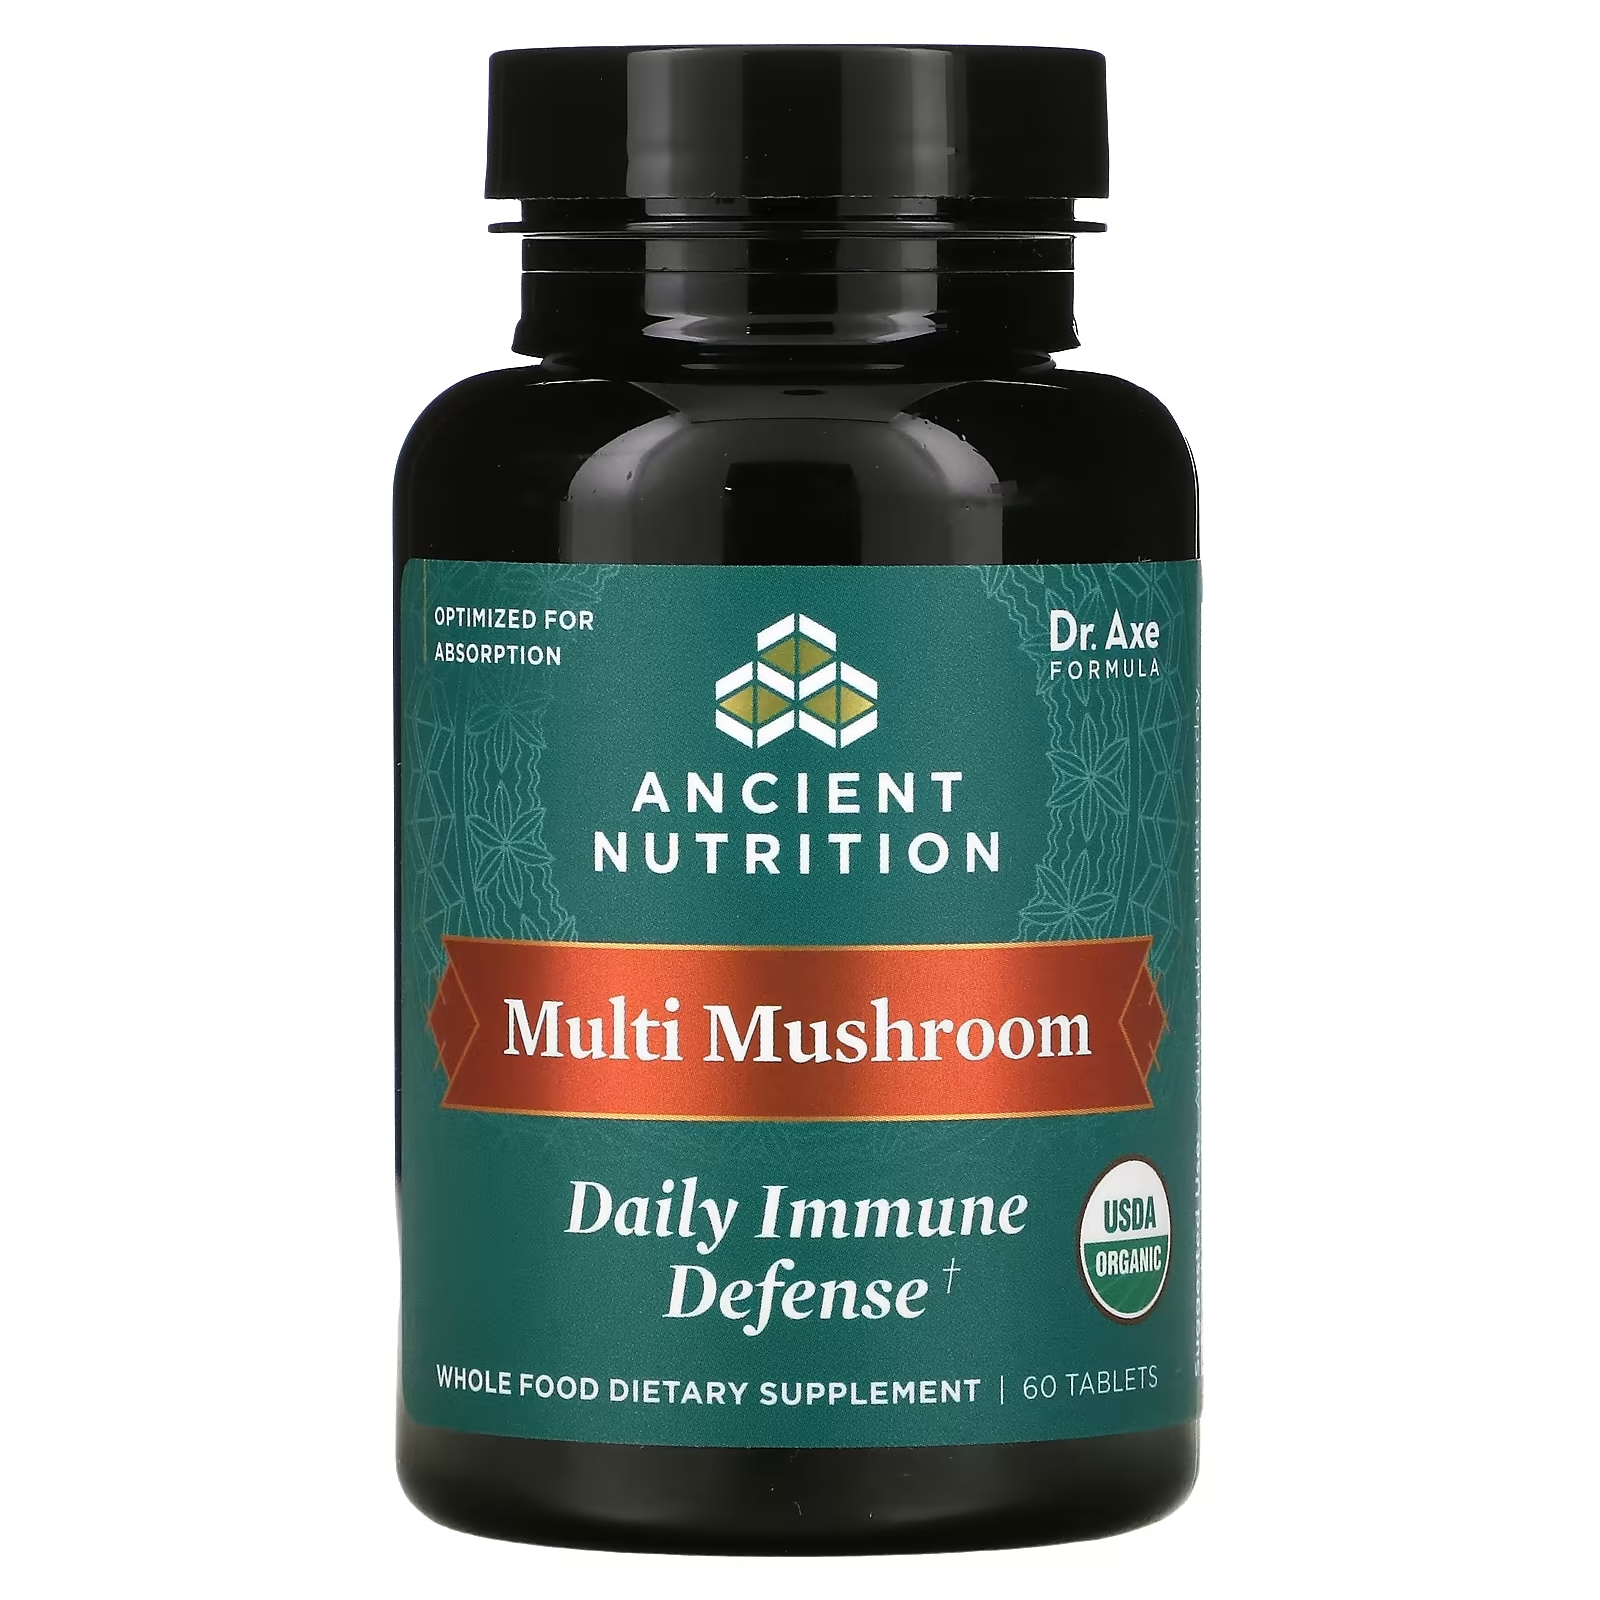 Dr. Axe Ancient Nutrition Multi Mushroom ежедневная защита иммунитета, 60 таблеток dr axe ancient nutrition multi mushroom ежедневная защита иммунитета 60 таблеток